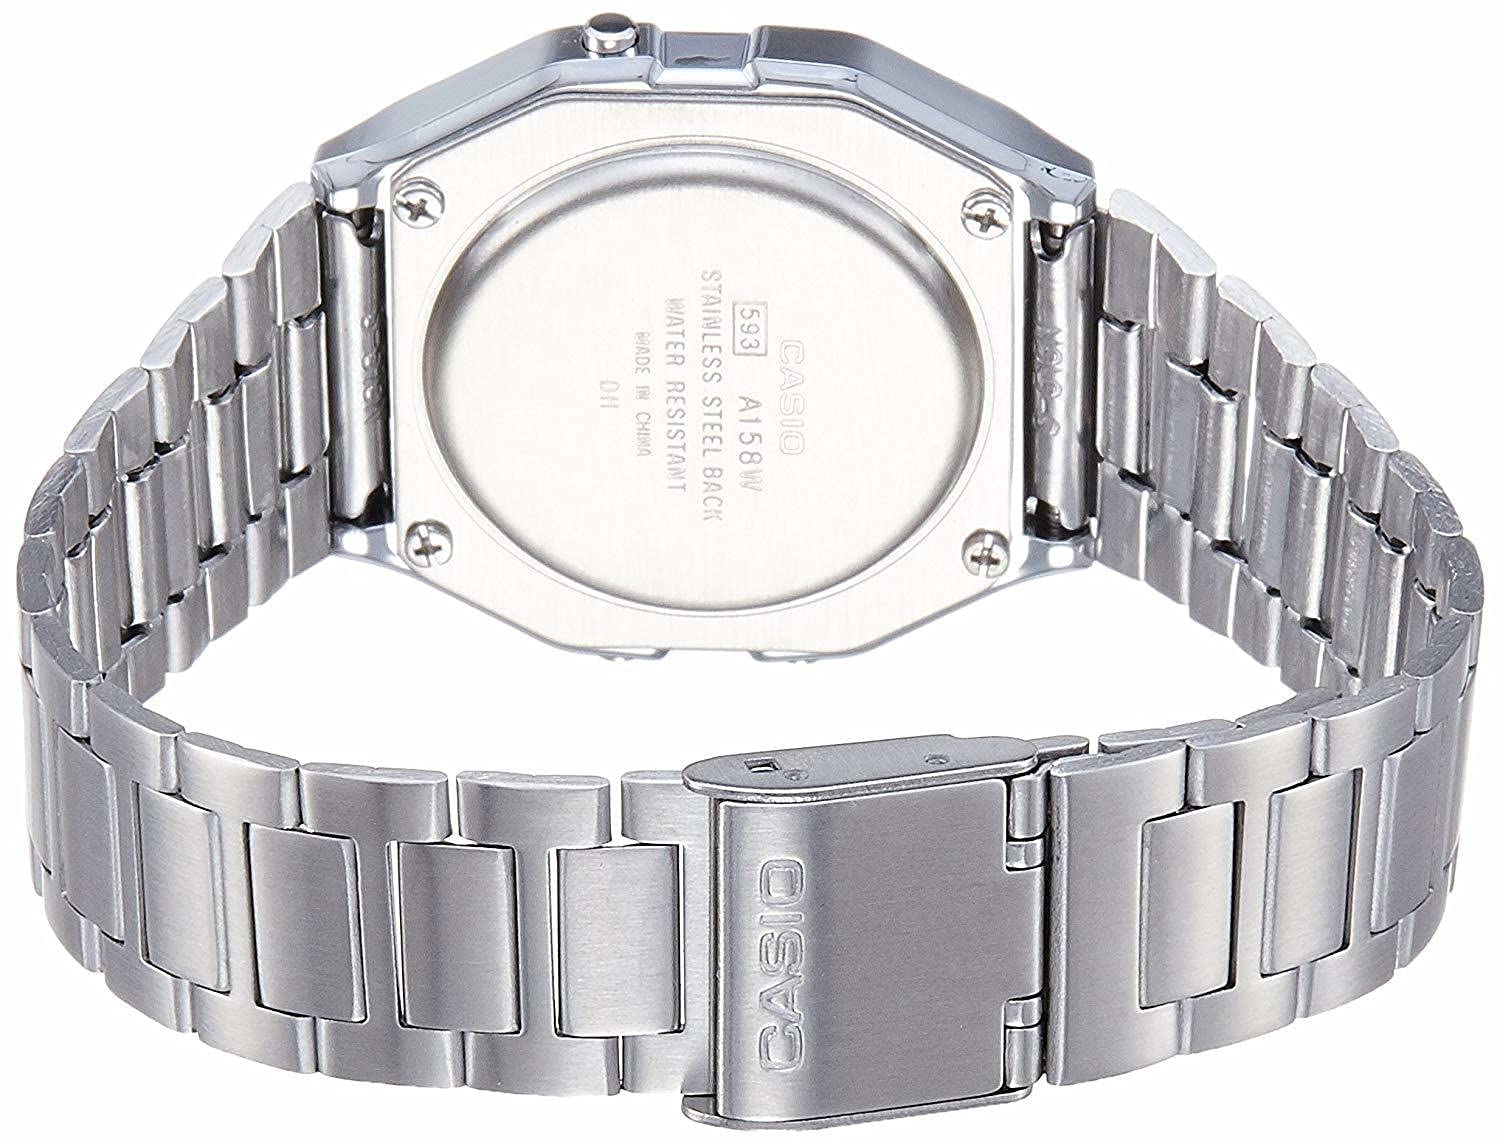 CASIO A158WA-1 Dress Digital Watch